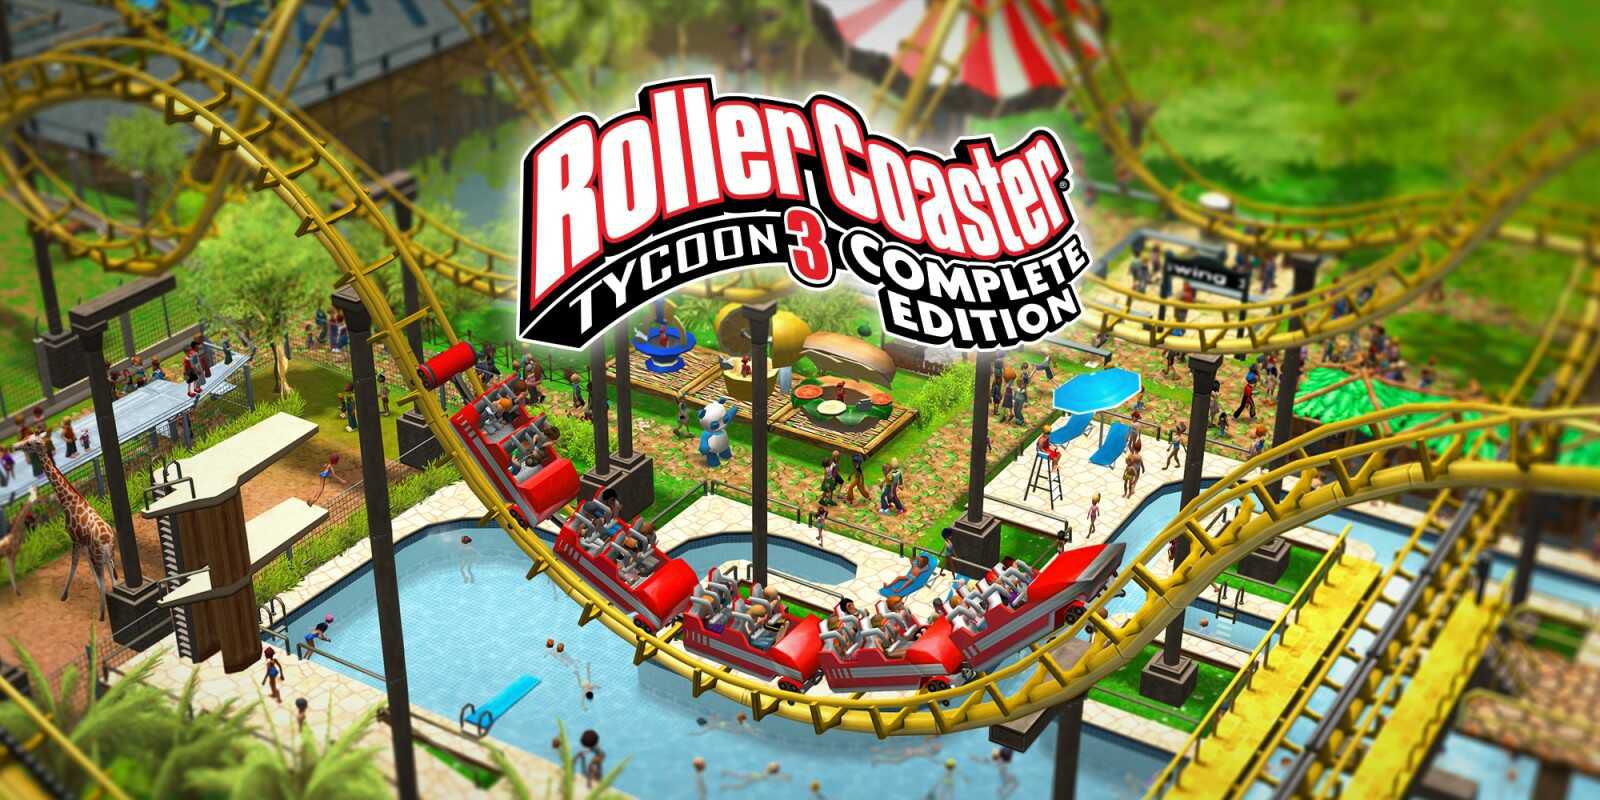 Nintendo eShop RollerCoaster Tycoon 3 Complete Edition   Nintendo Switch für 10,49€ PVG 29,99€